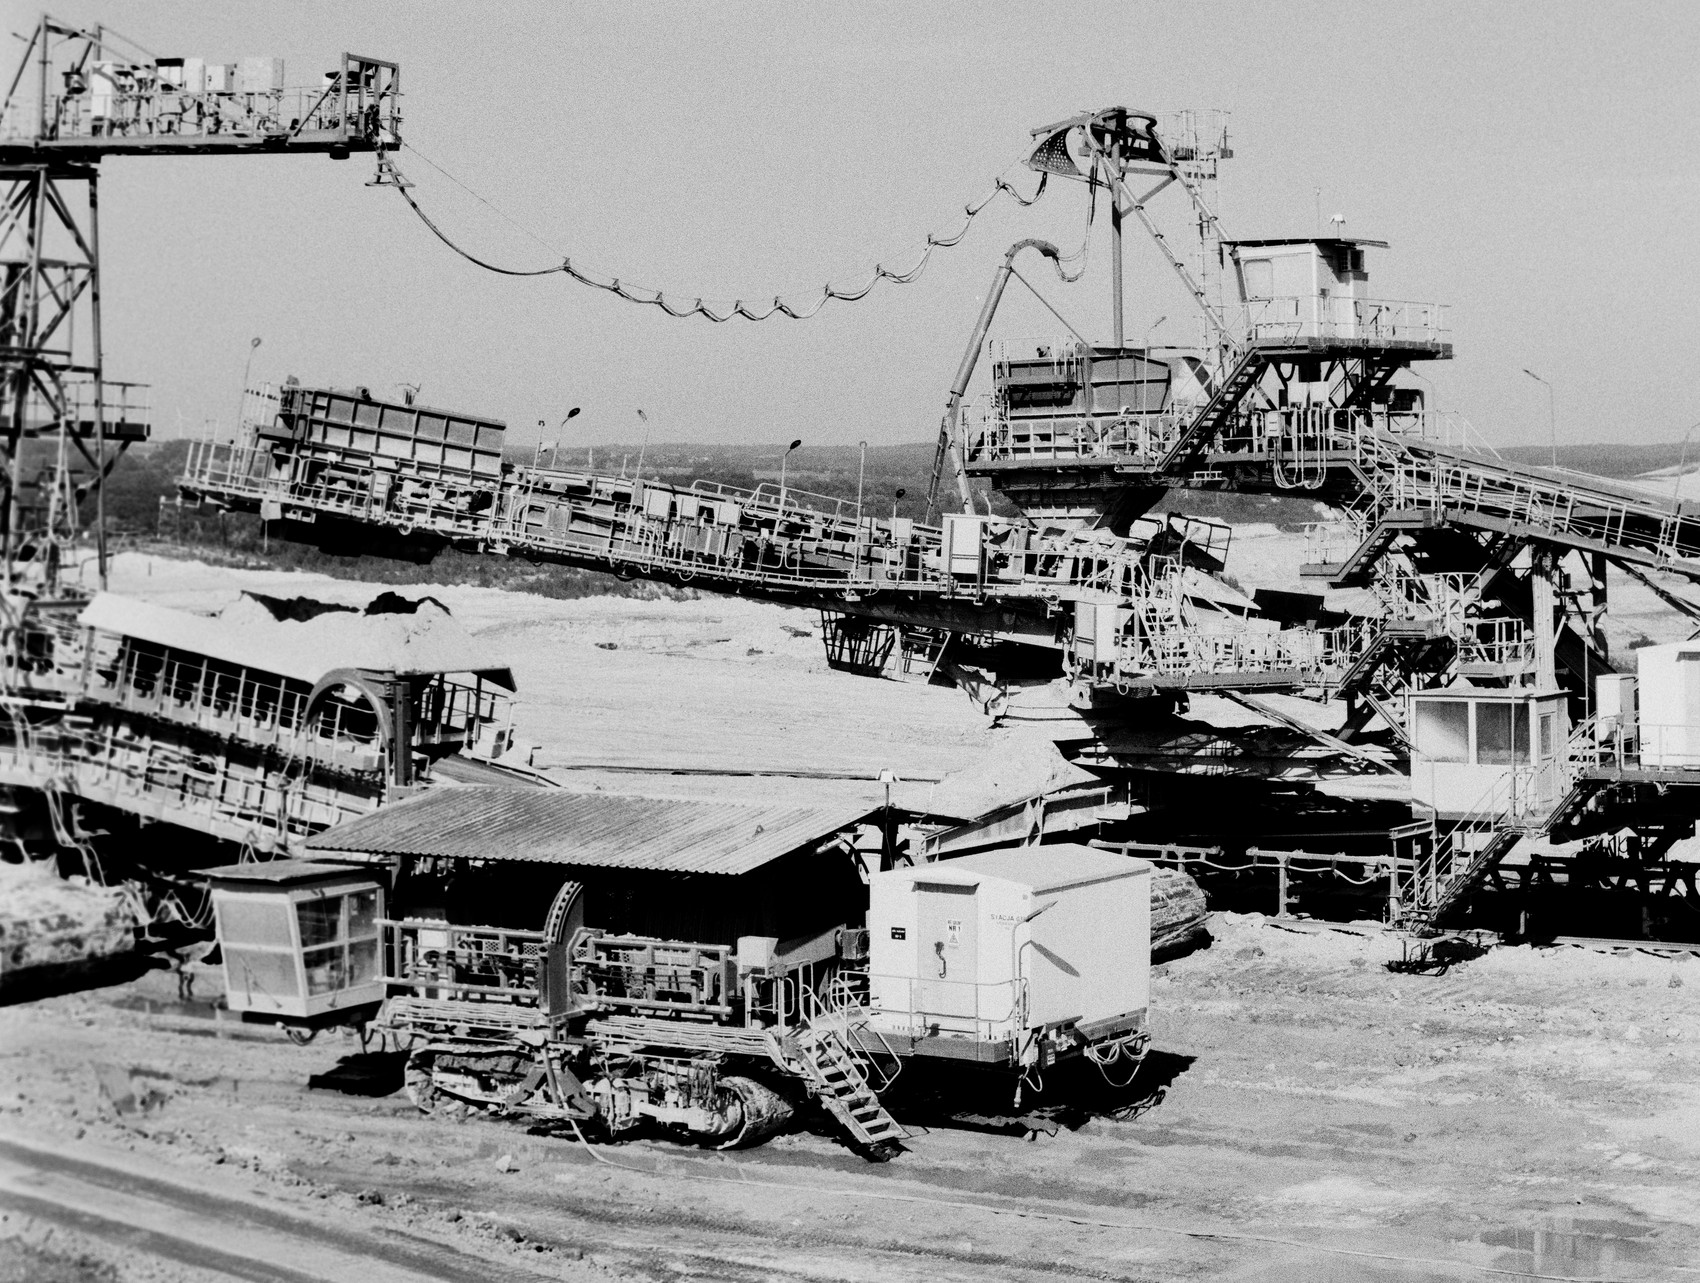 Gerrman lignite mining equipment